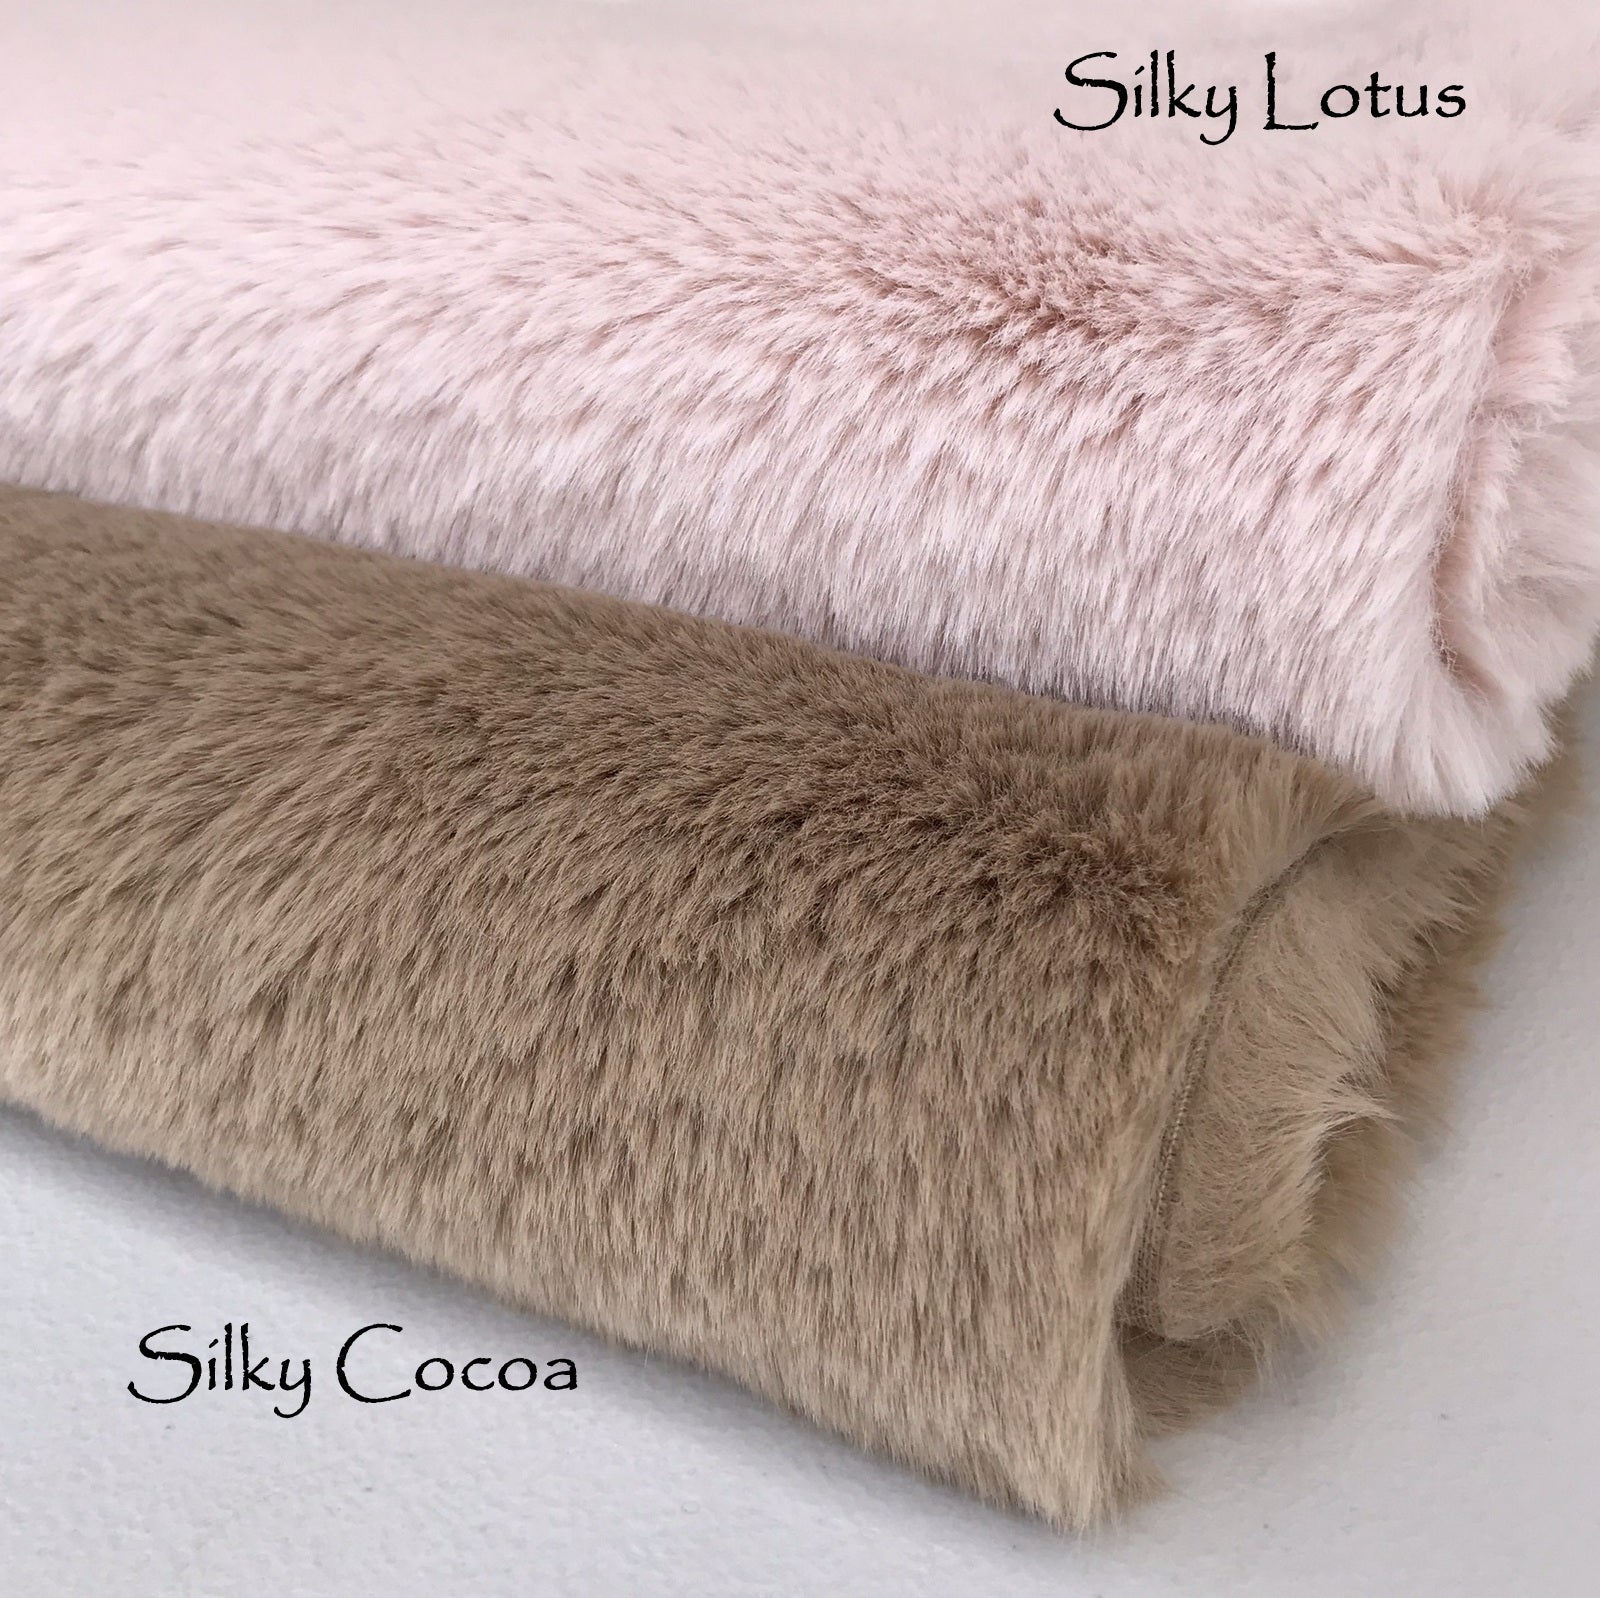 Silky Cocoa - Powder Soft Faux Fur